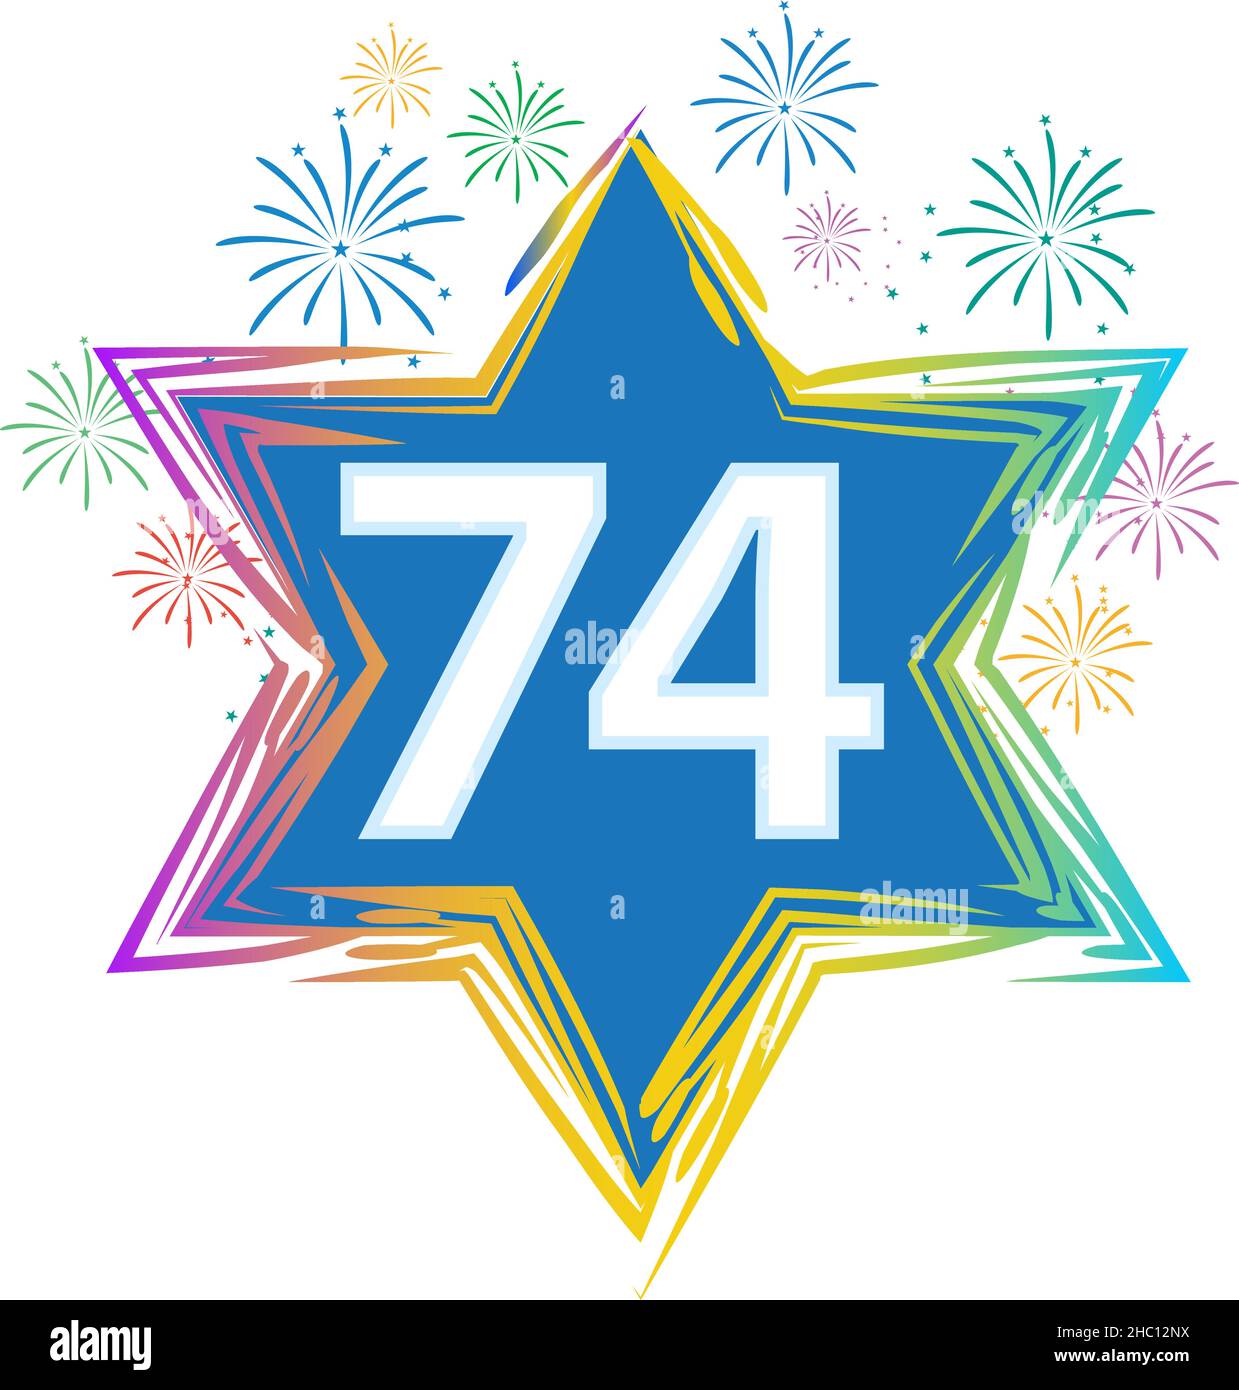 Israel 74 Independence Day Anniversary Celebration, Yom Ha'atzmaut ...